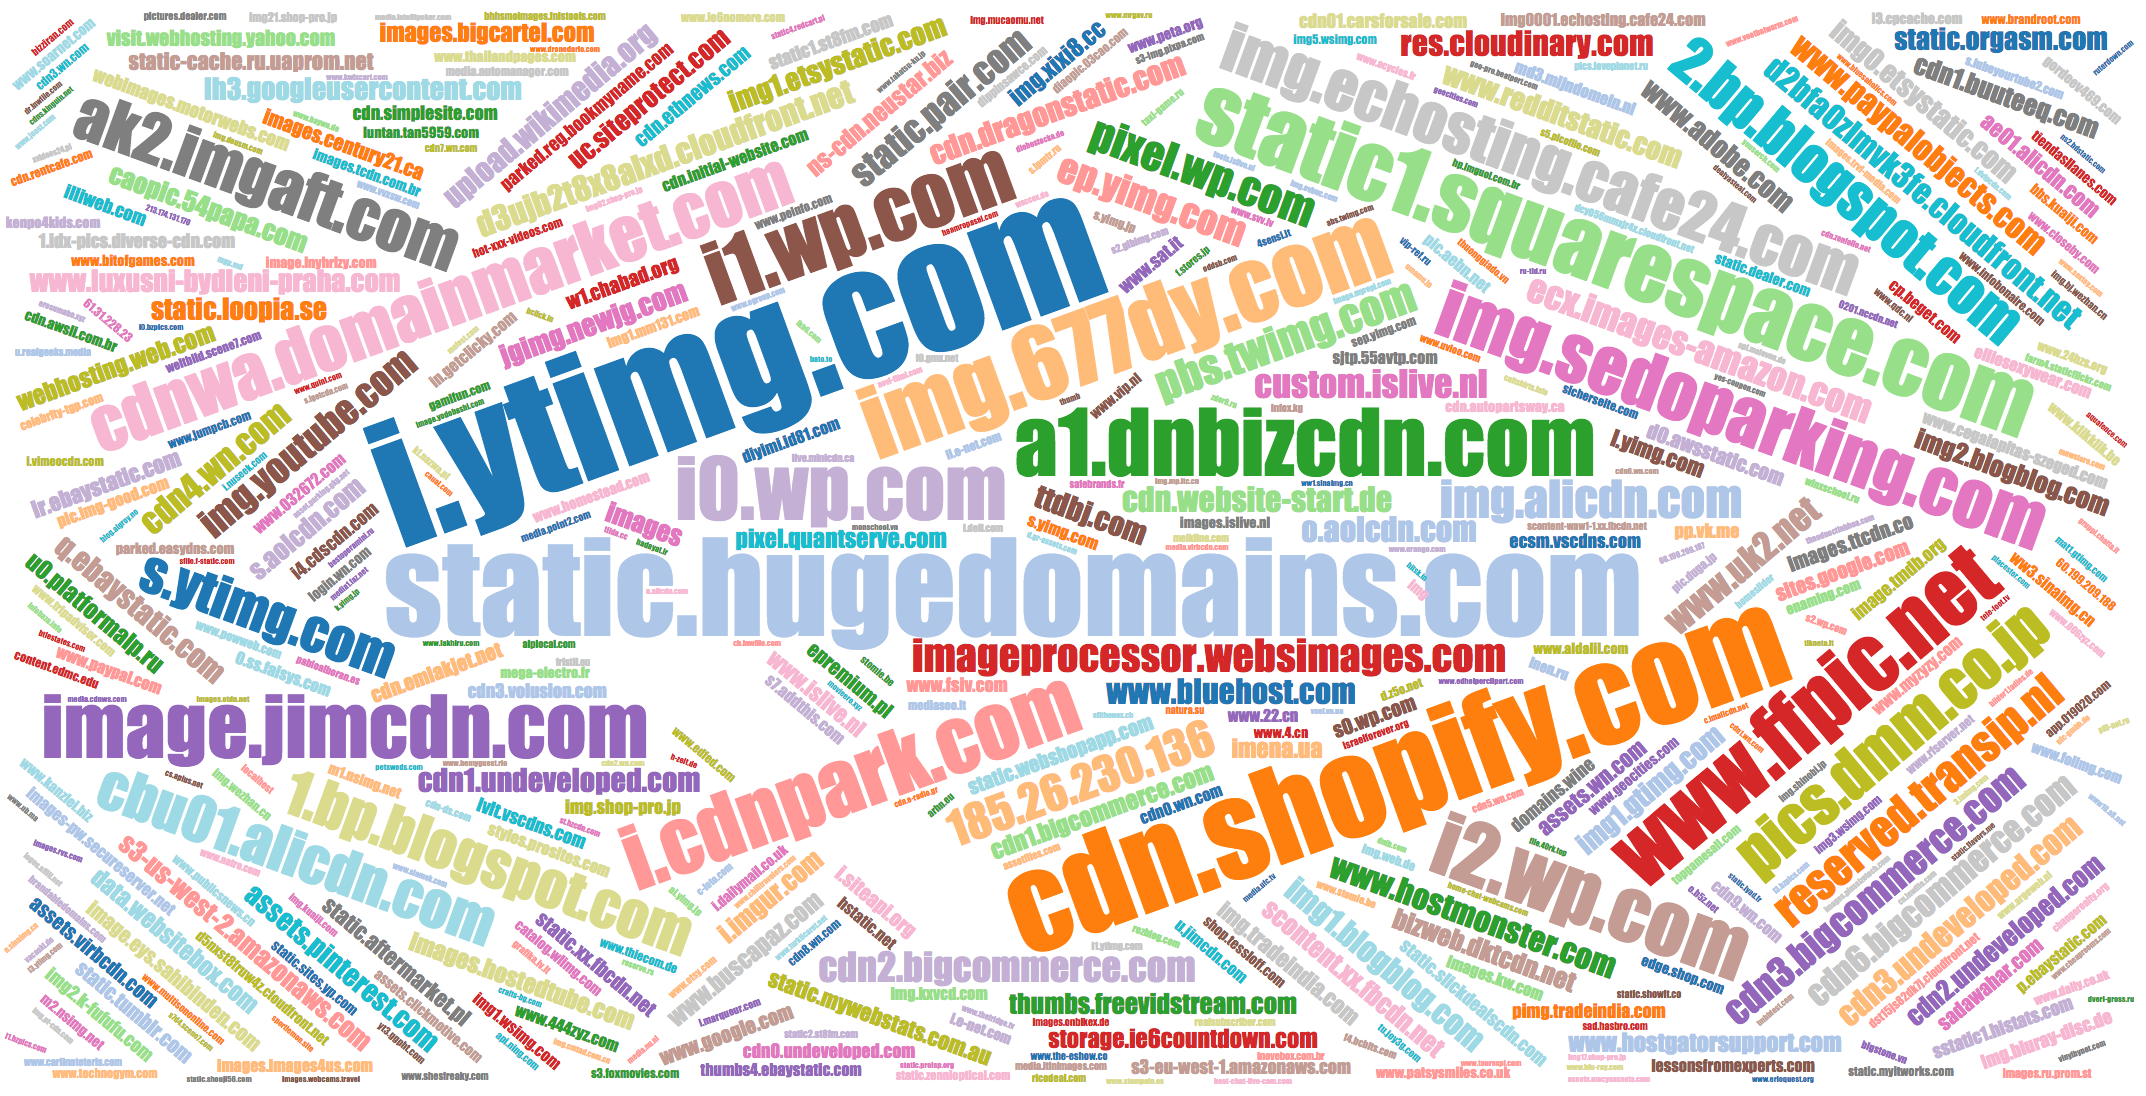 Popular names of IMG domains resources.blogblog.com, reserved.transip.nl, etc.